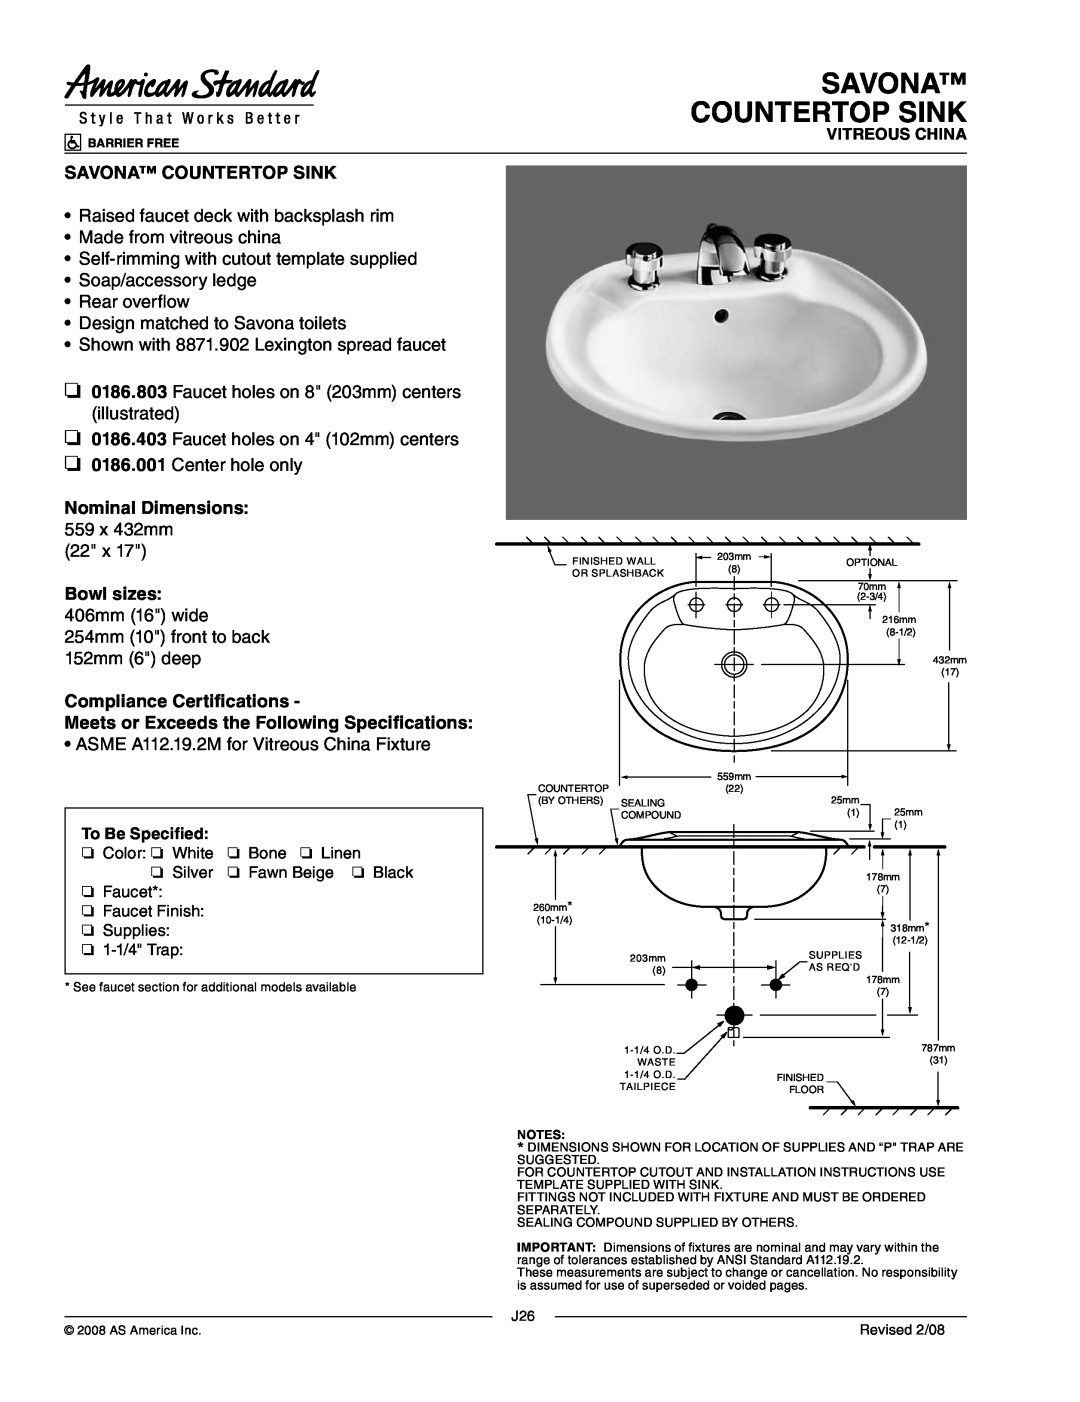 American Standard 0186.001, 0186.803 dimensions Savona Countertop Sink, Nominal Dimensions 559 x 432mm, Bowl sizes 